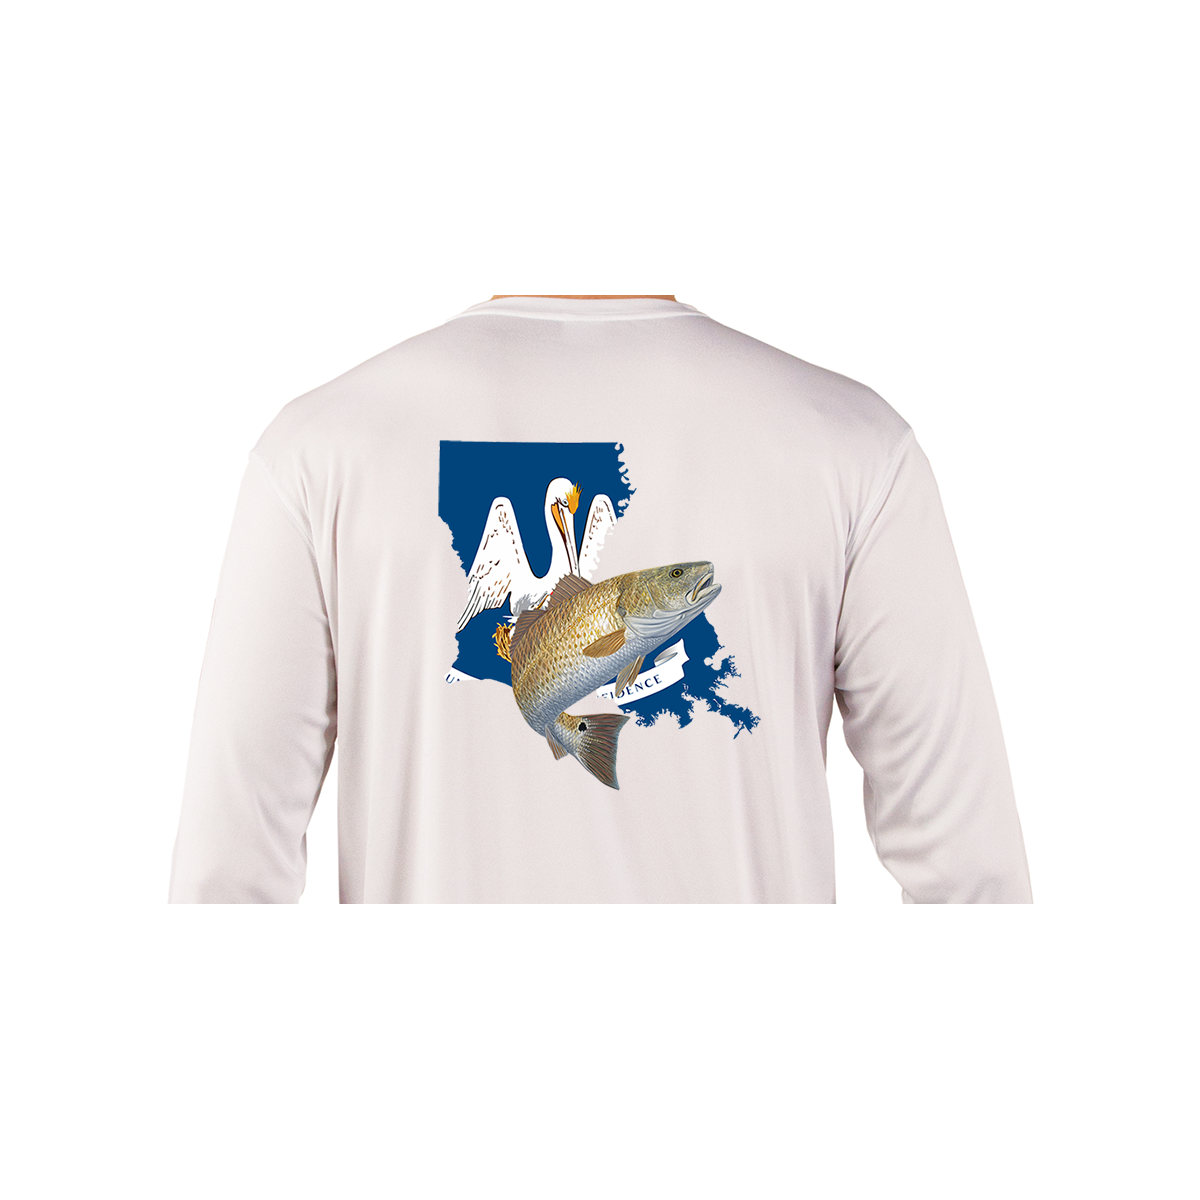 Redfish Louisiana Fishing Shirt with Flag Sleeve Small / White